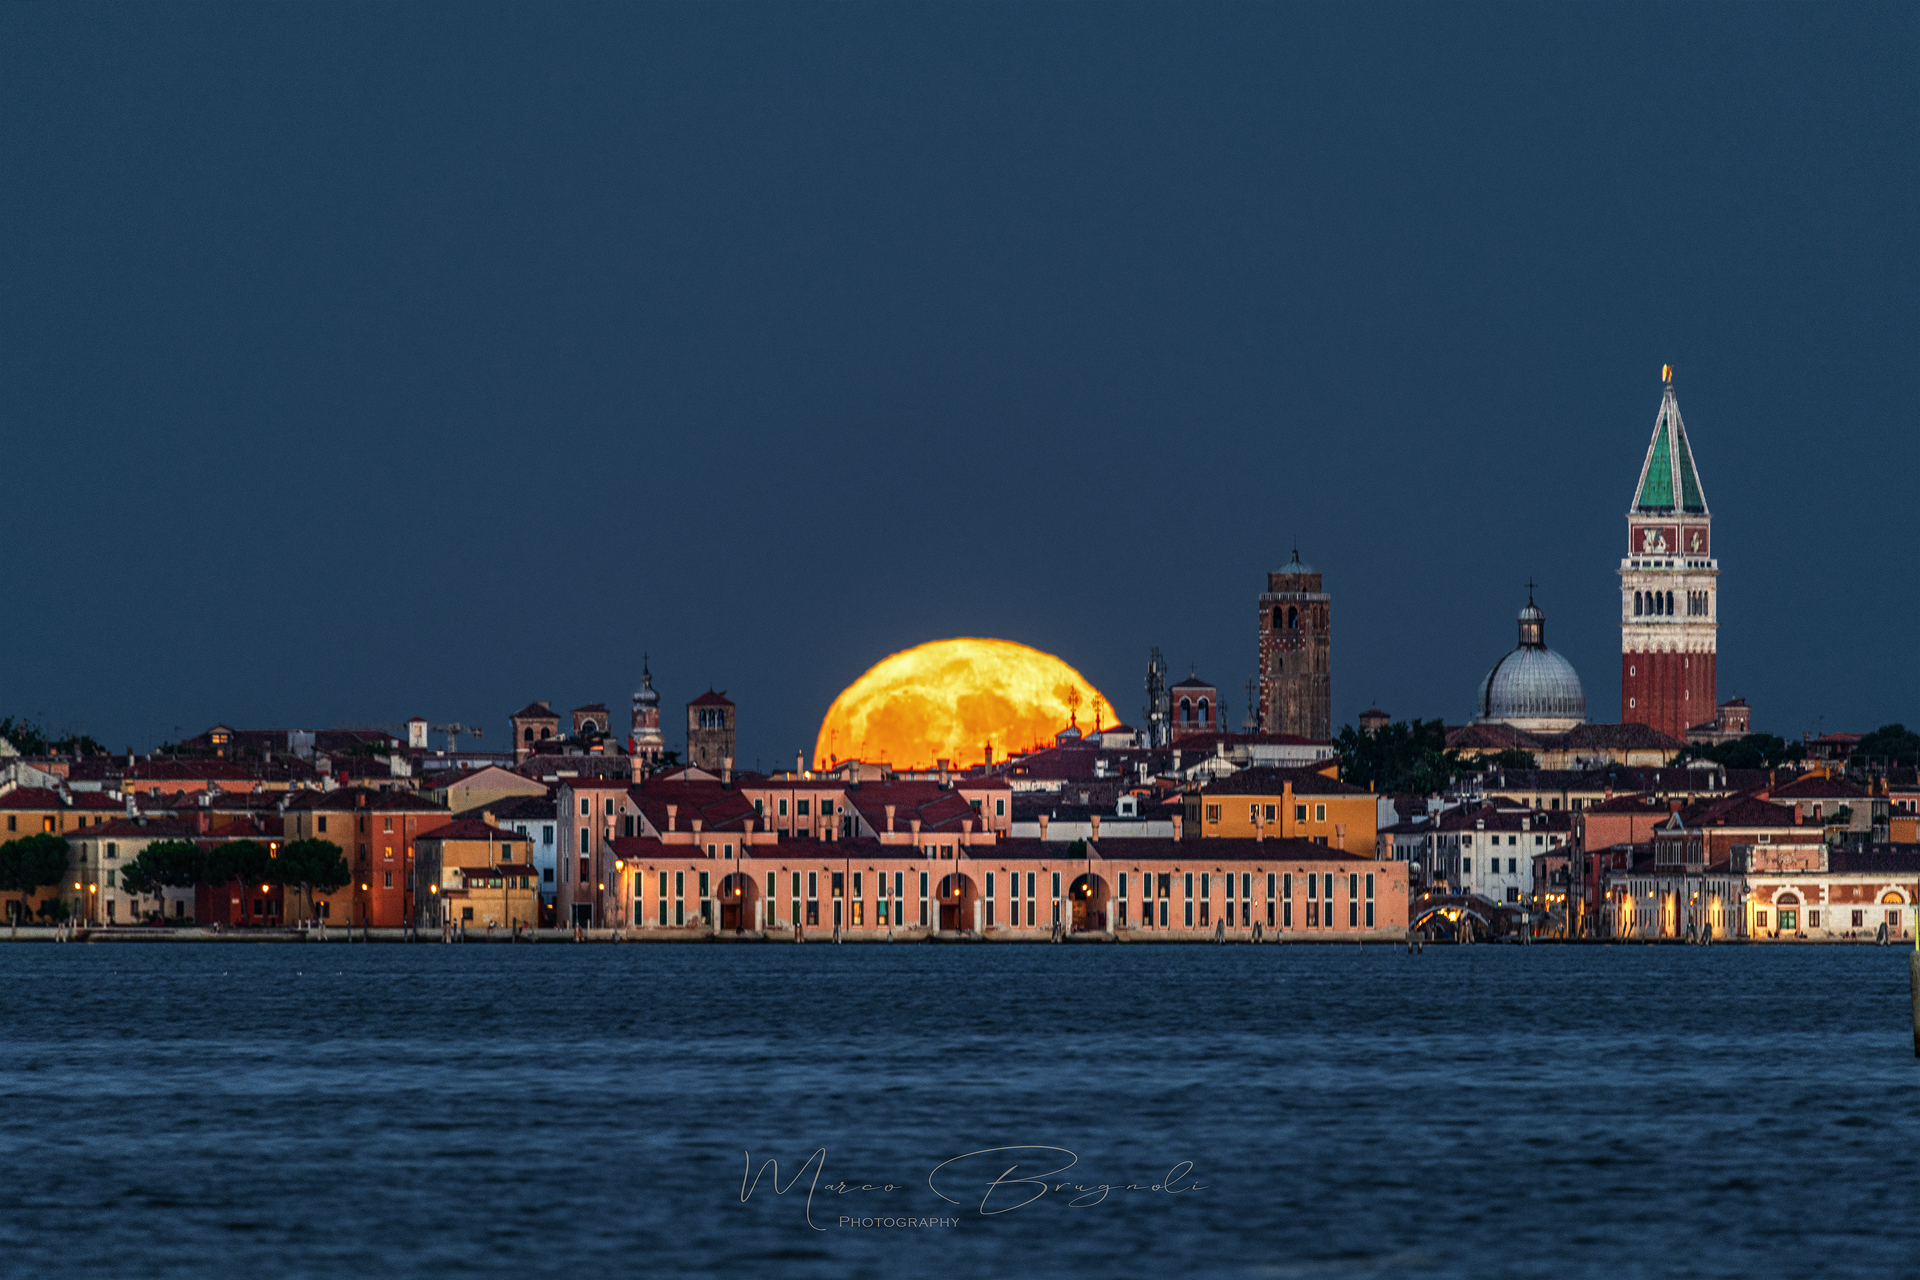 Full moon over Venice...